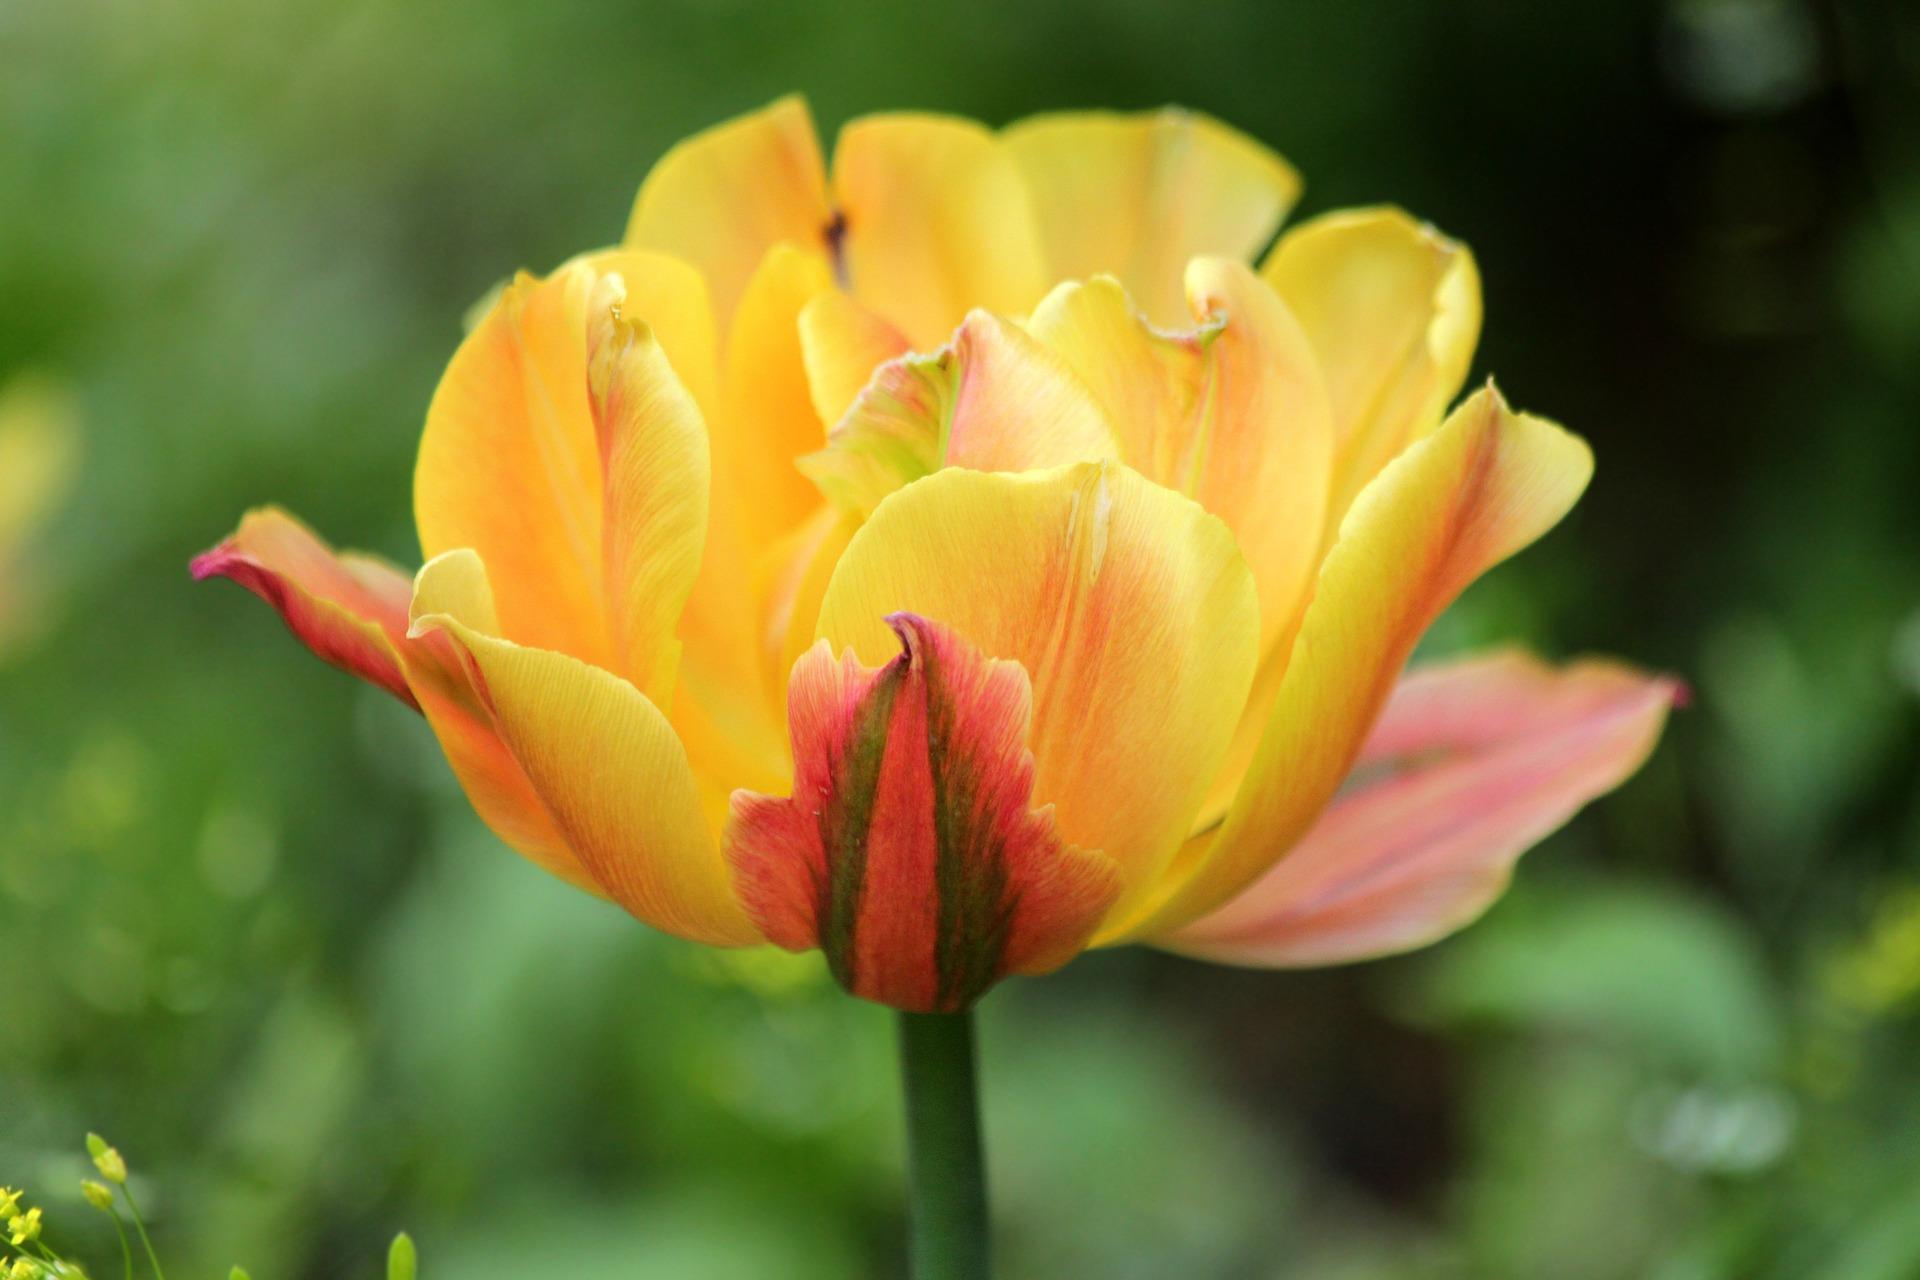 Tulip Double Early 'Freeman' - Tulip (Shipping begins Fall 2020) from Leo Berbee Bulb Company